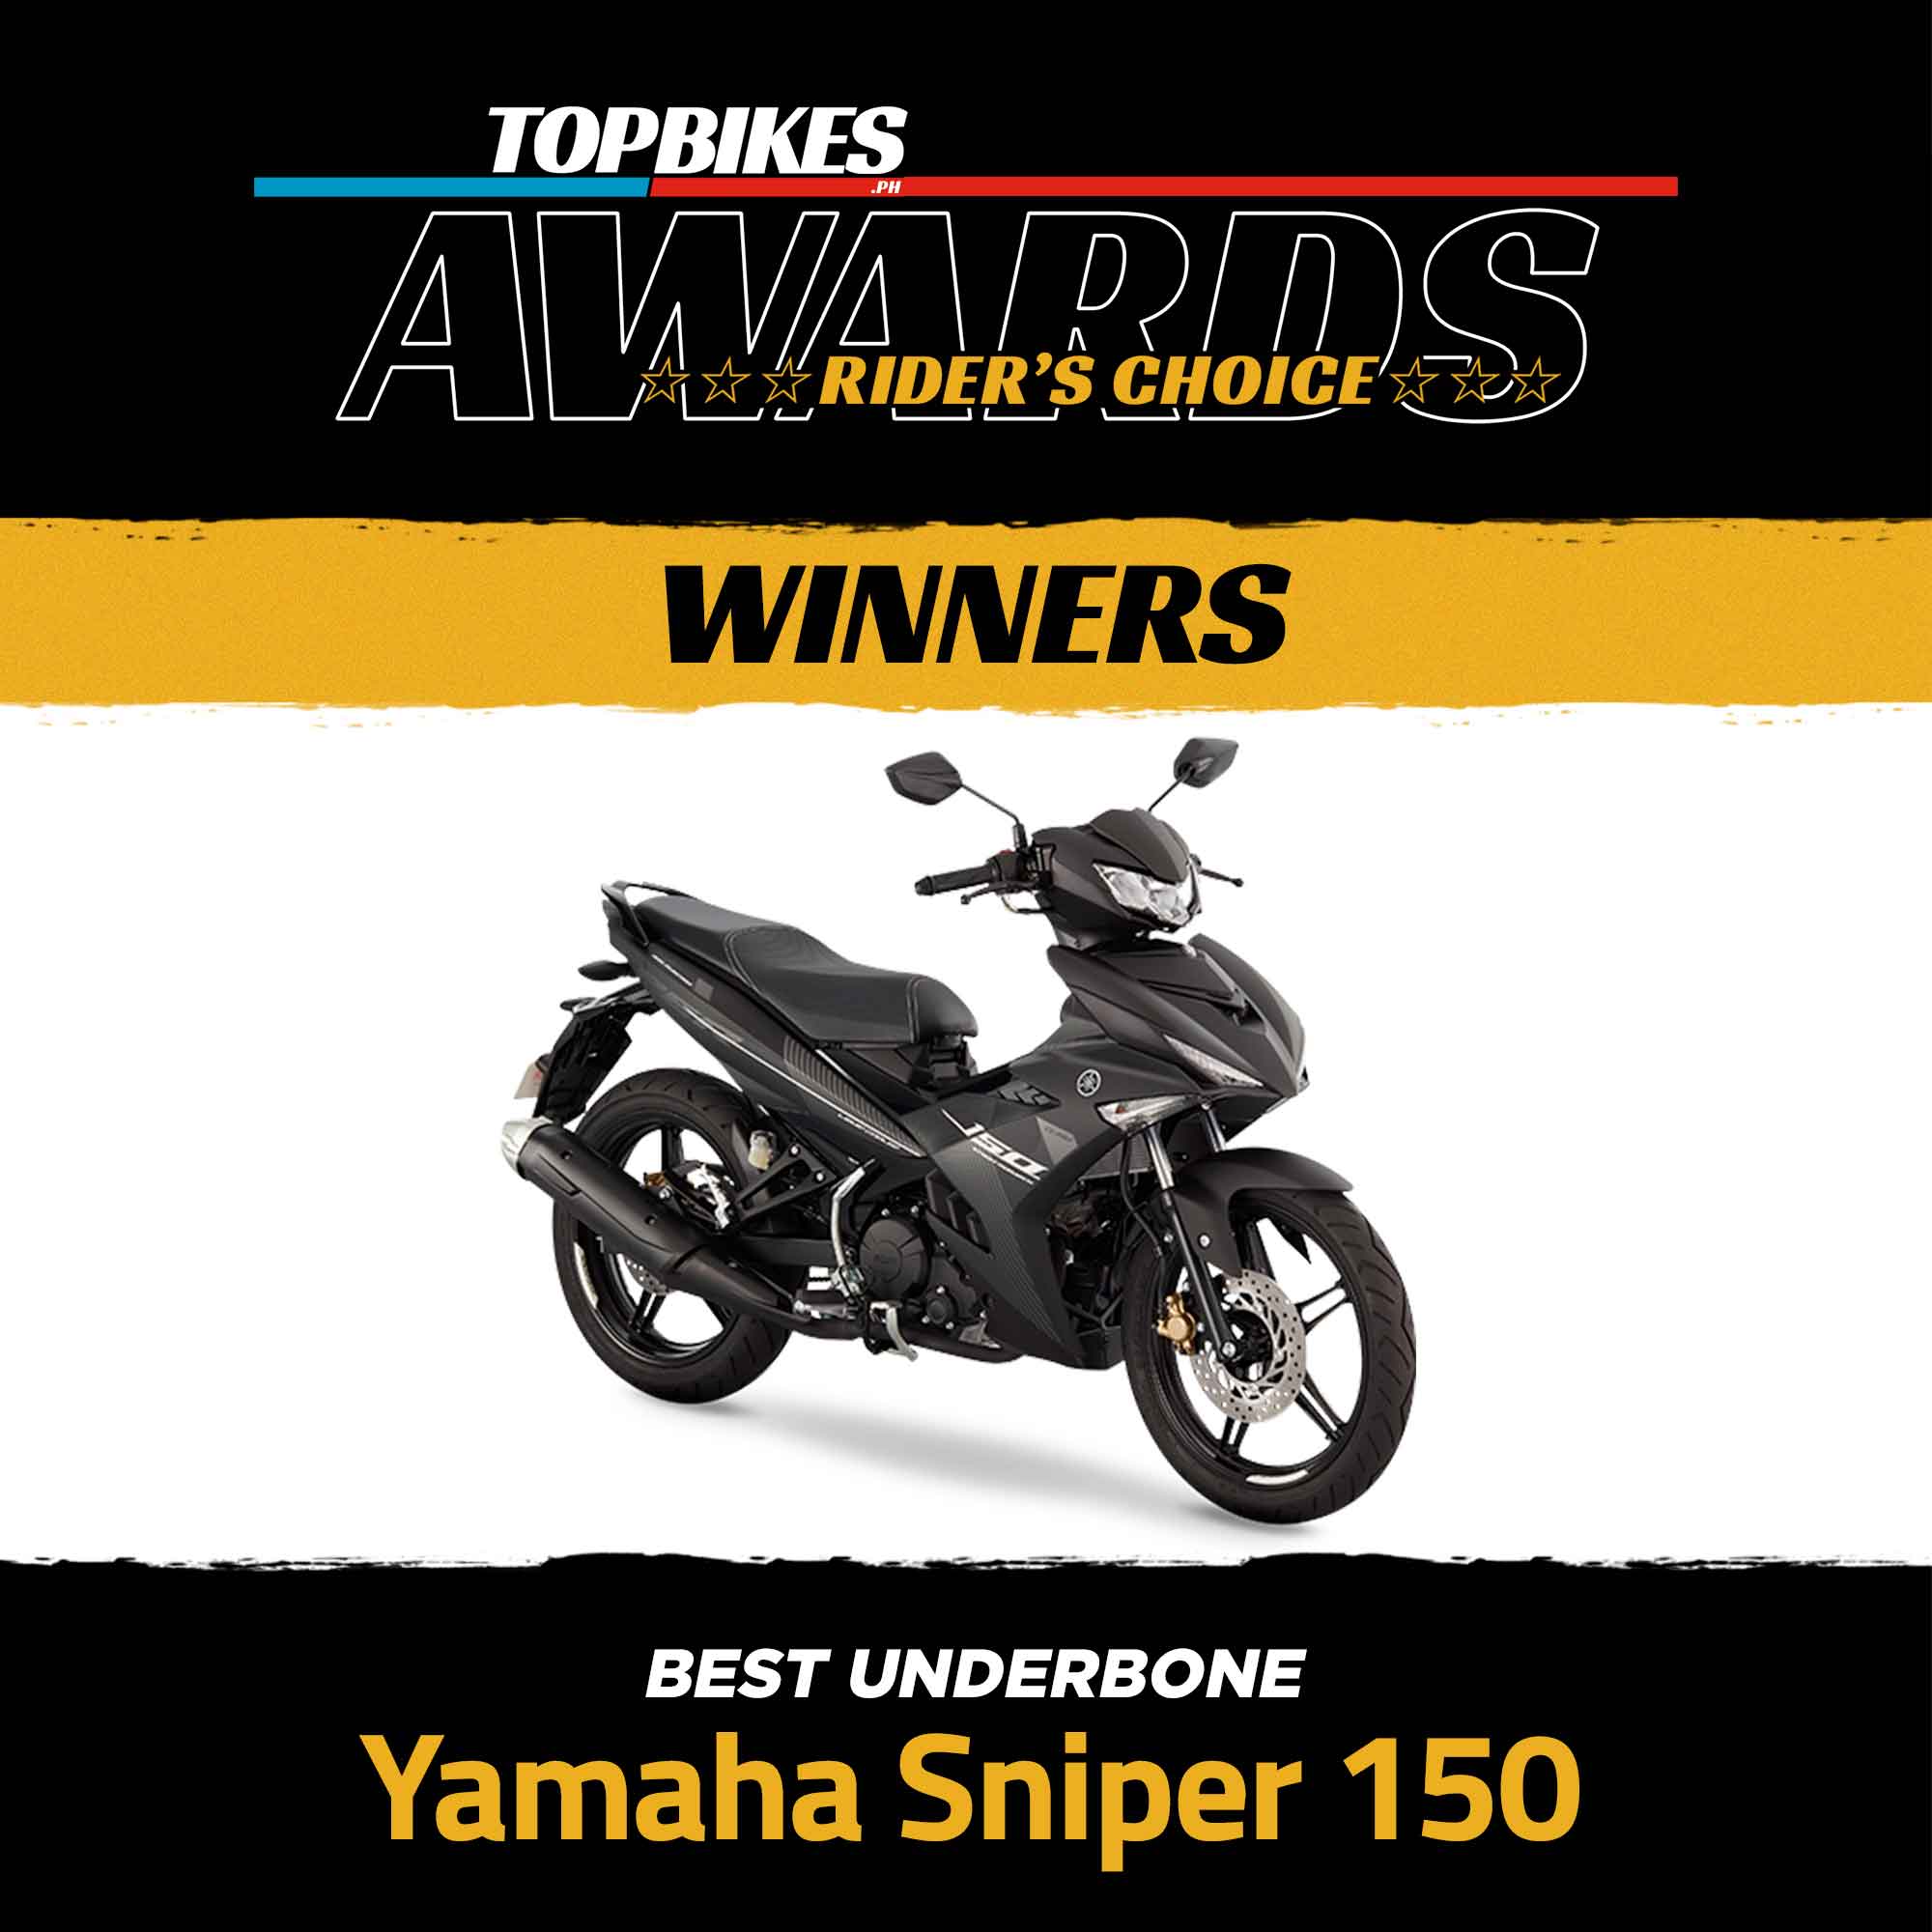 Yamaha Sniper 150